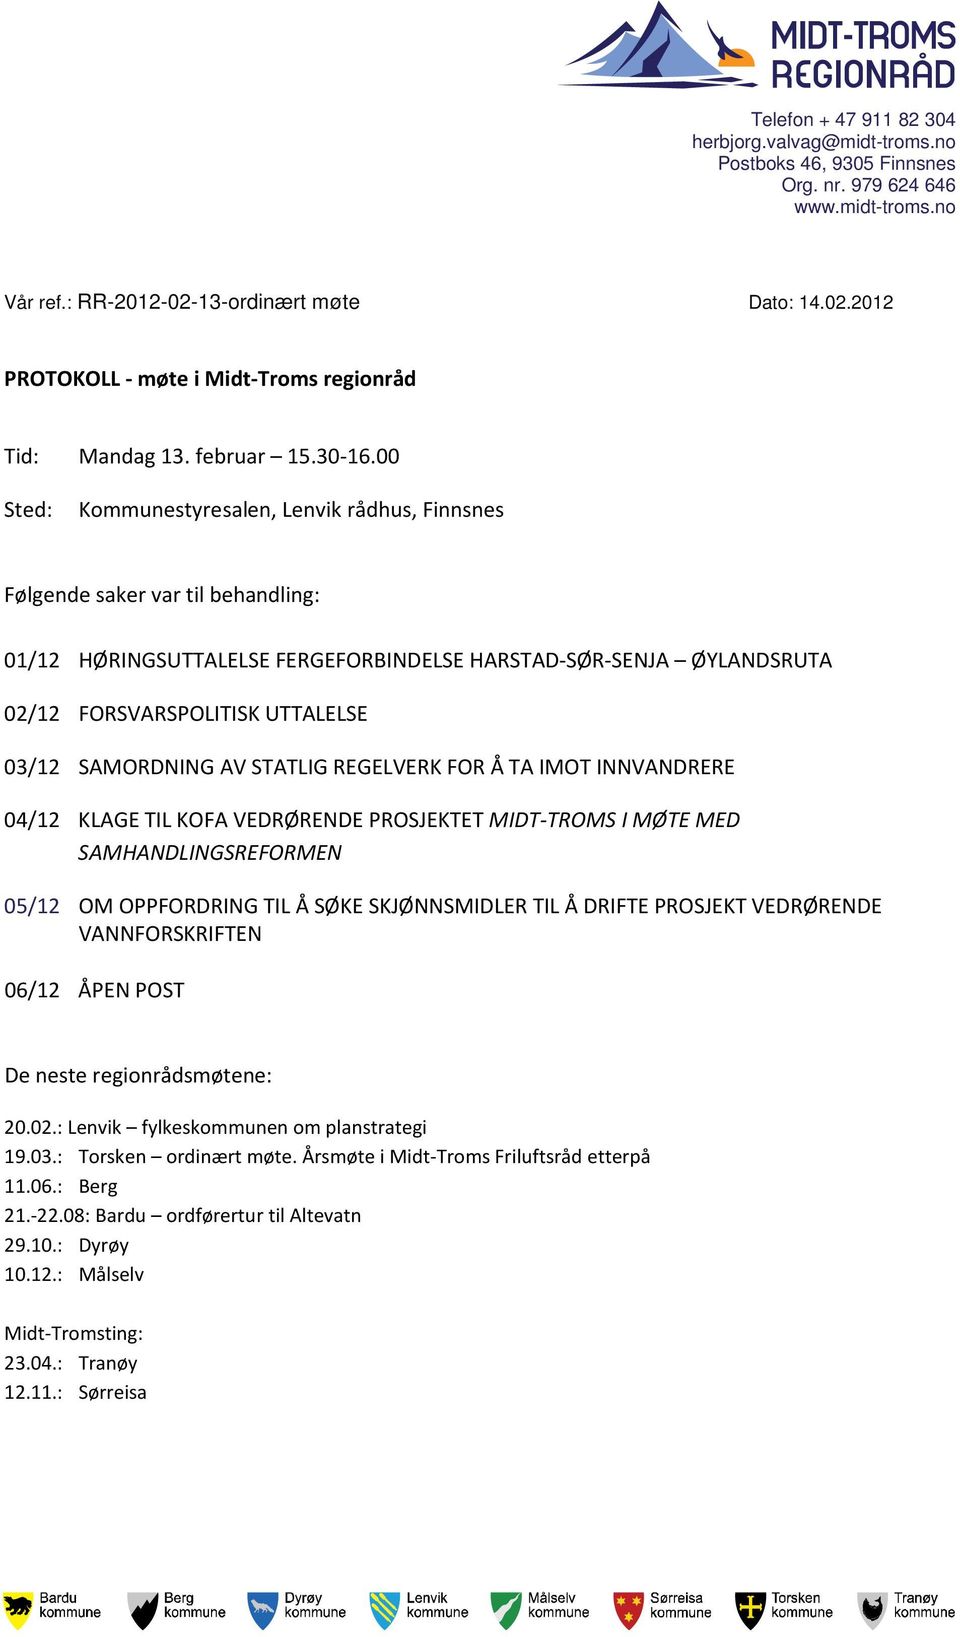 00 Sted: Kommunestyresalen, Lenvik rådhus, Finnsnes Følgende saker var til behandling: 01/12 HØRINGSUTTALELSE FERGEFORBINDELSE HARSTAD-SØR-SENJA ØYLANDSRUTA 02/12 FORSVARSPOLITISK UTTALELSE 03/12